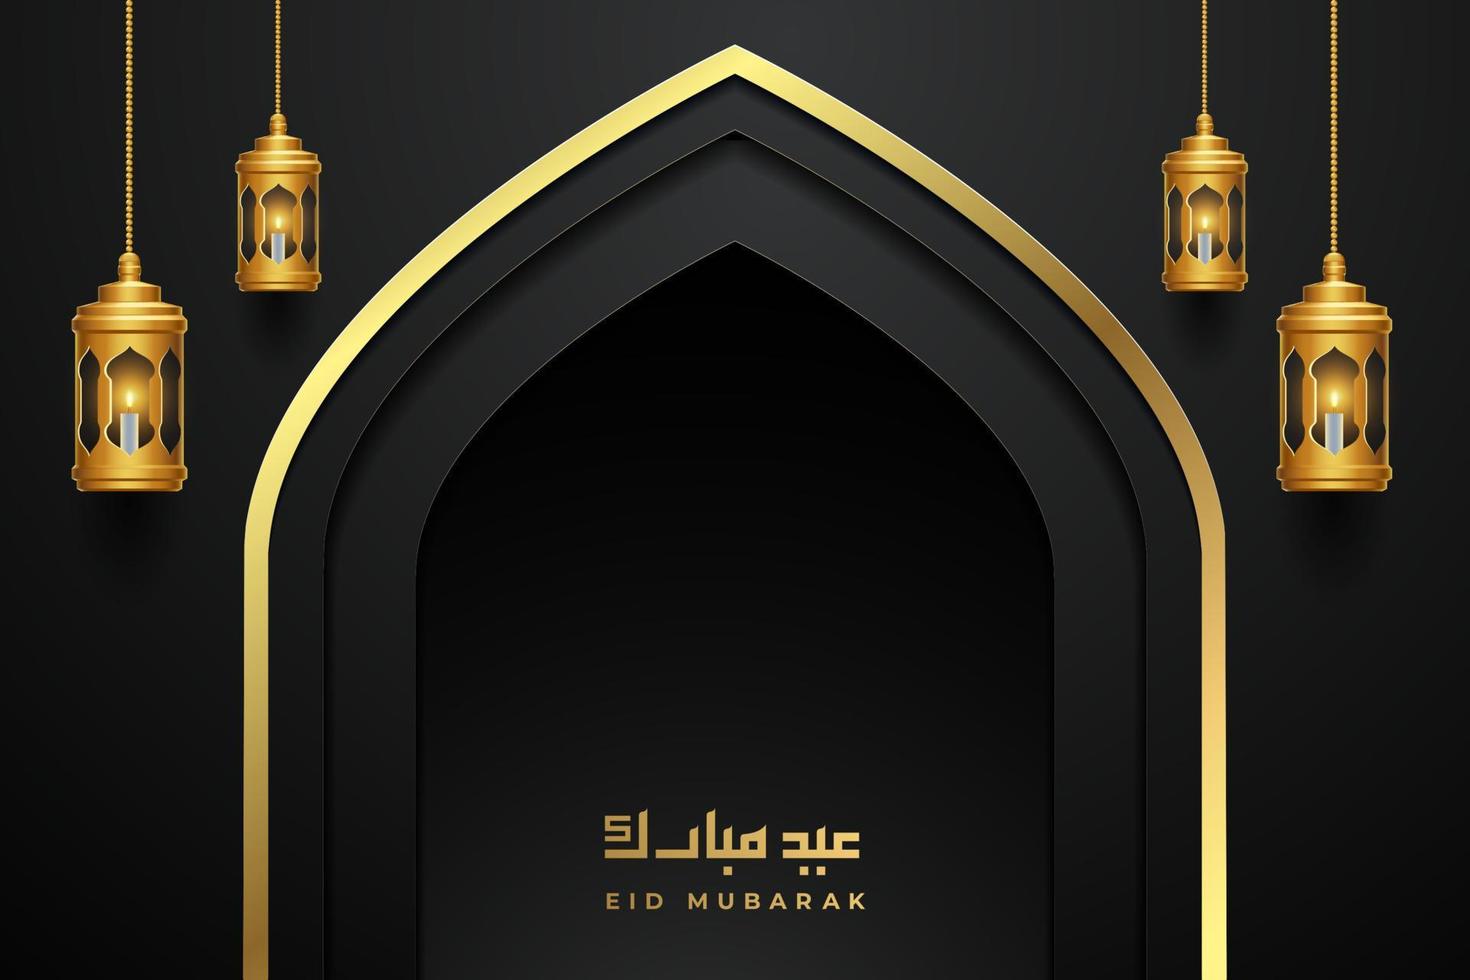 eid mubarok greeting card background with islamic ornament vector illustration